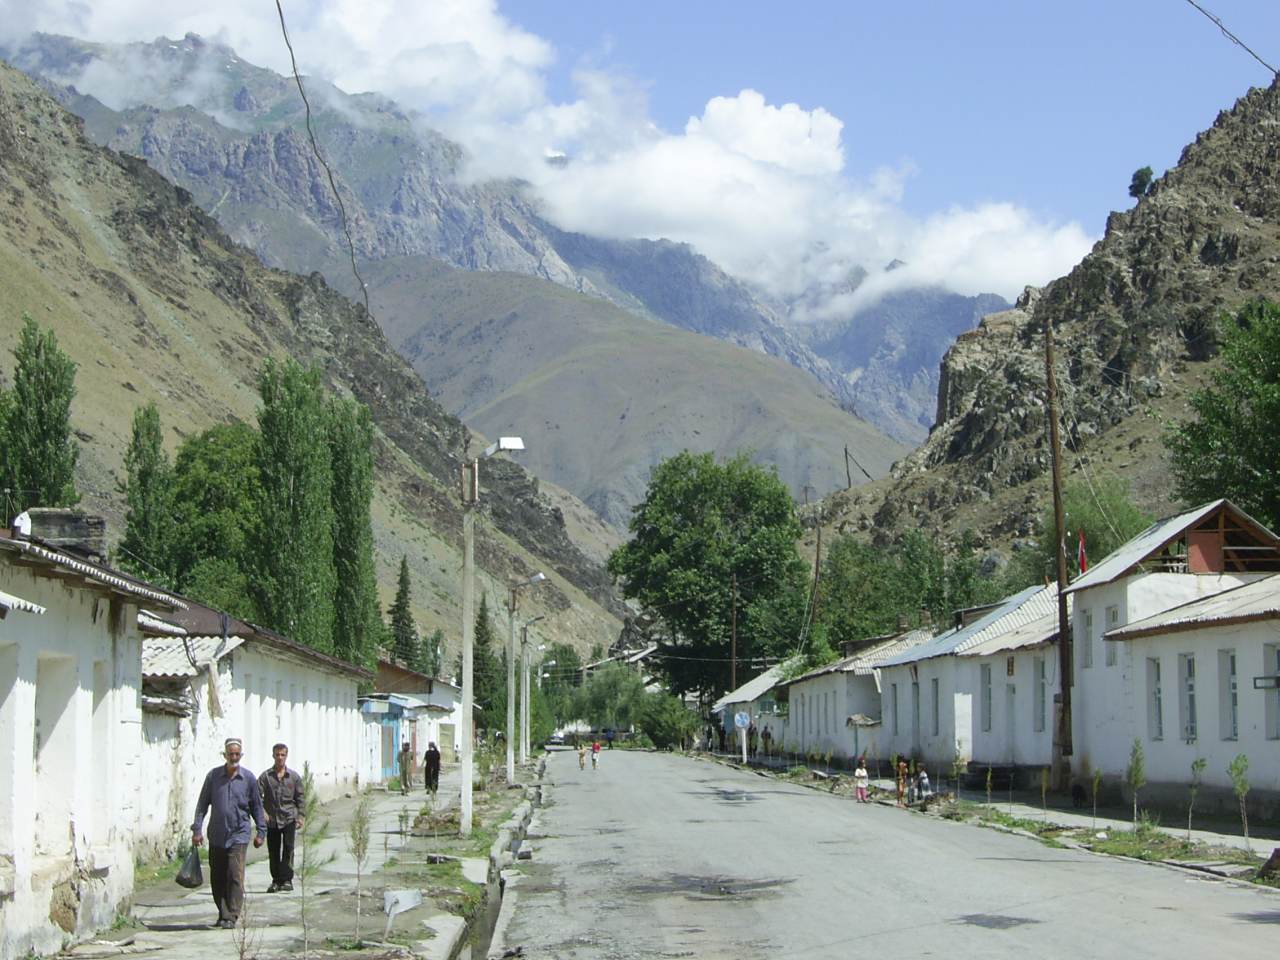 Qala-e Khumb, Darvoz district, Gorno-Badakhshan Autonomous Oblast (GBAO)